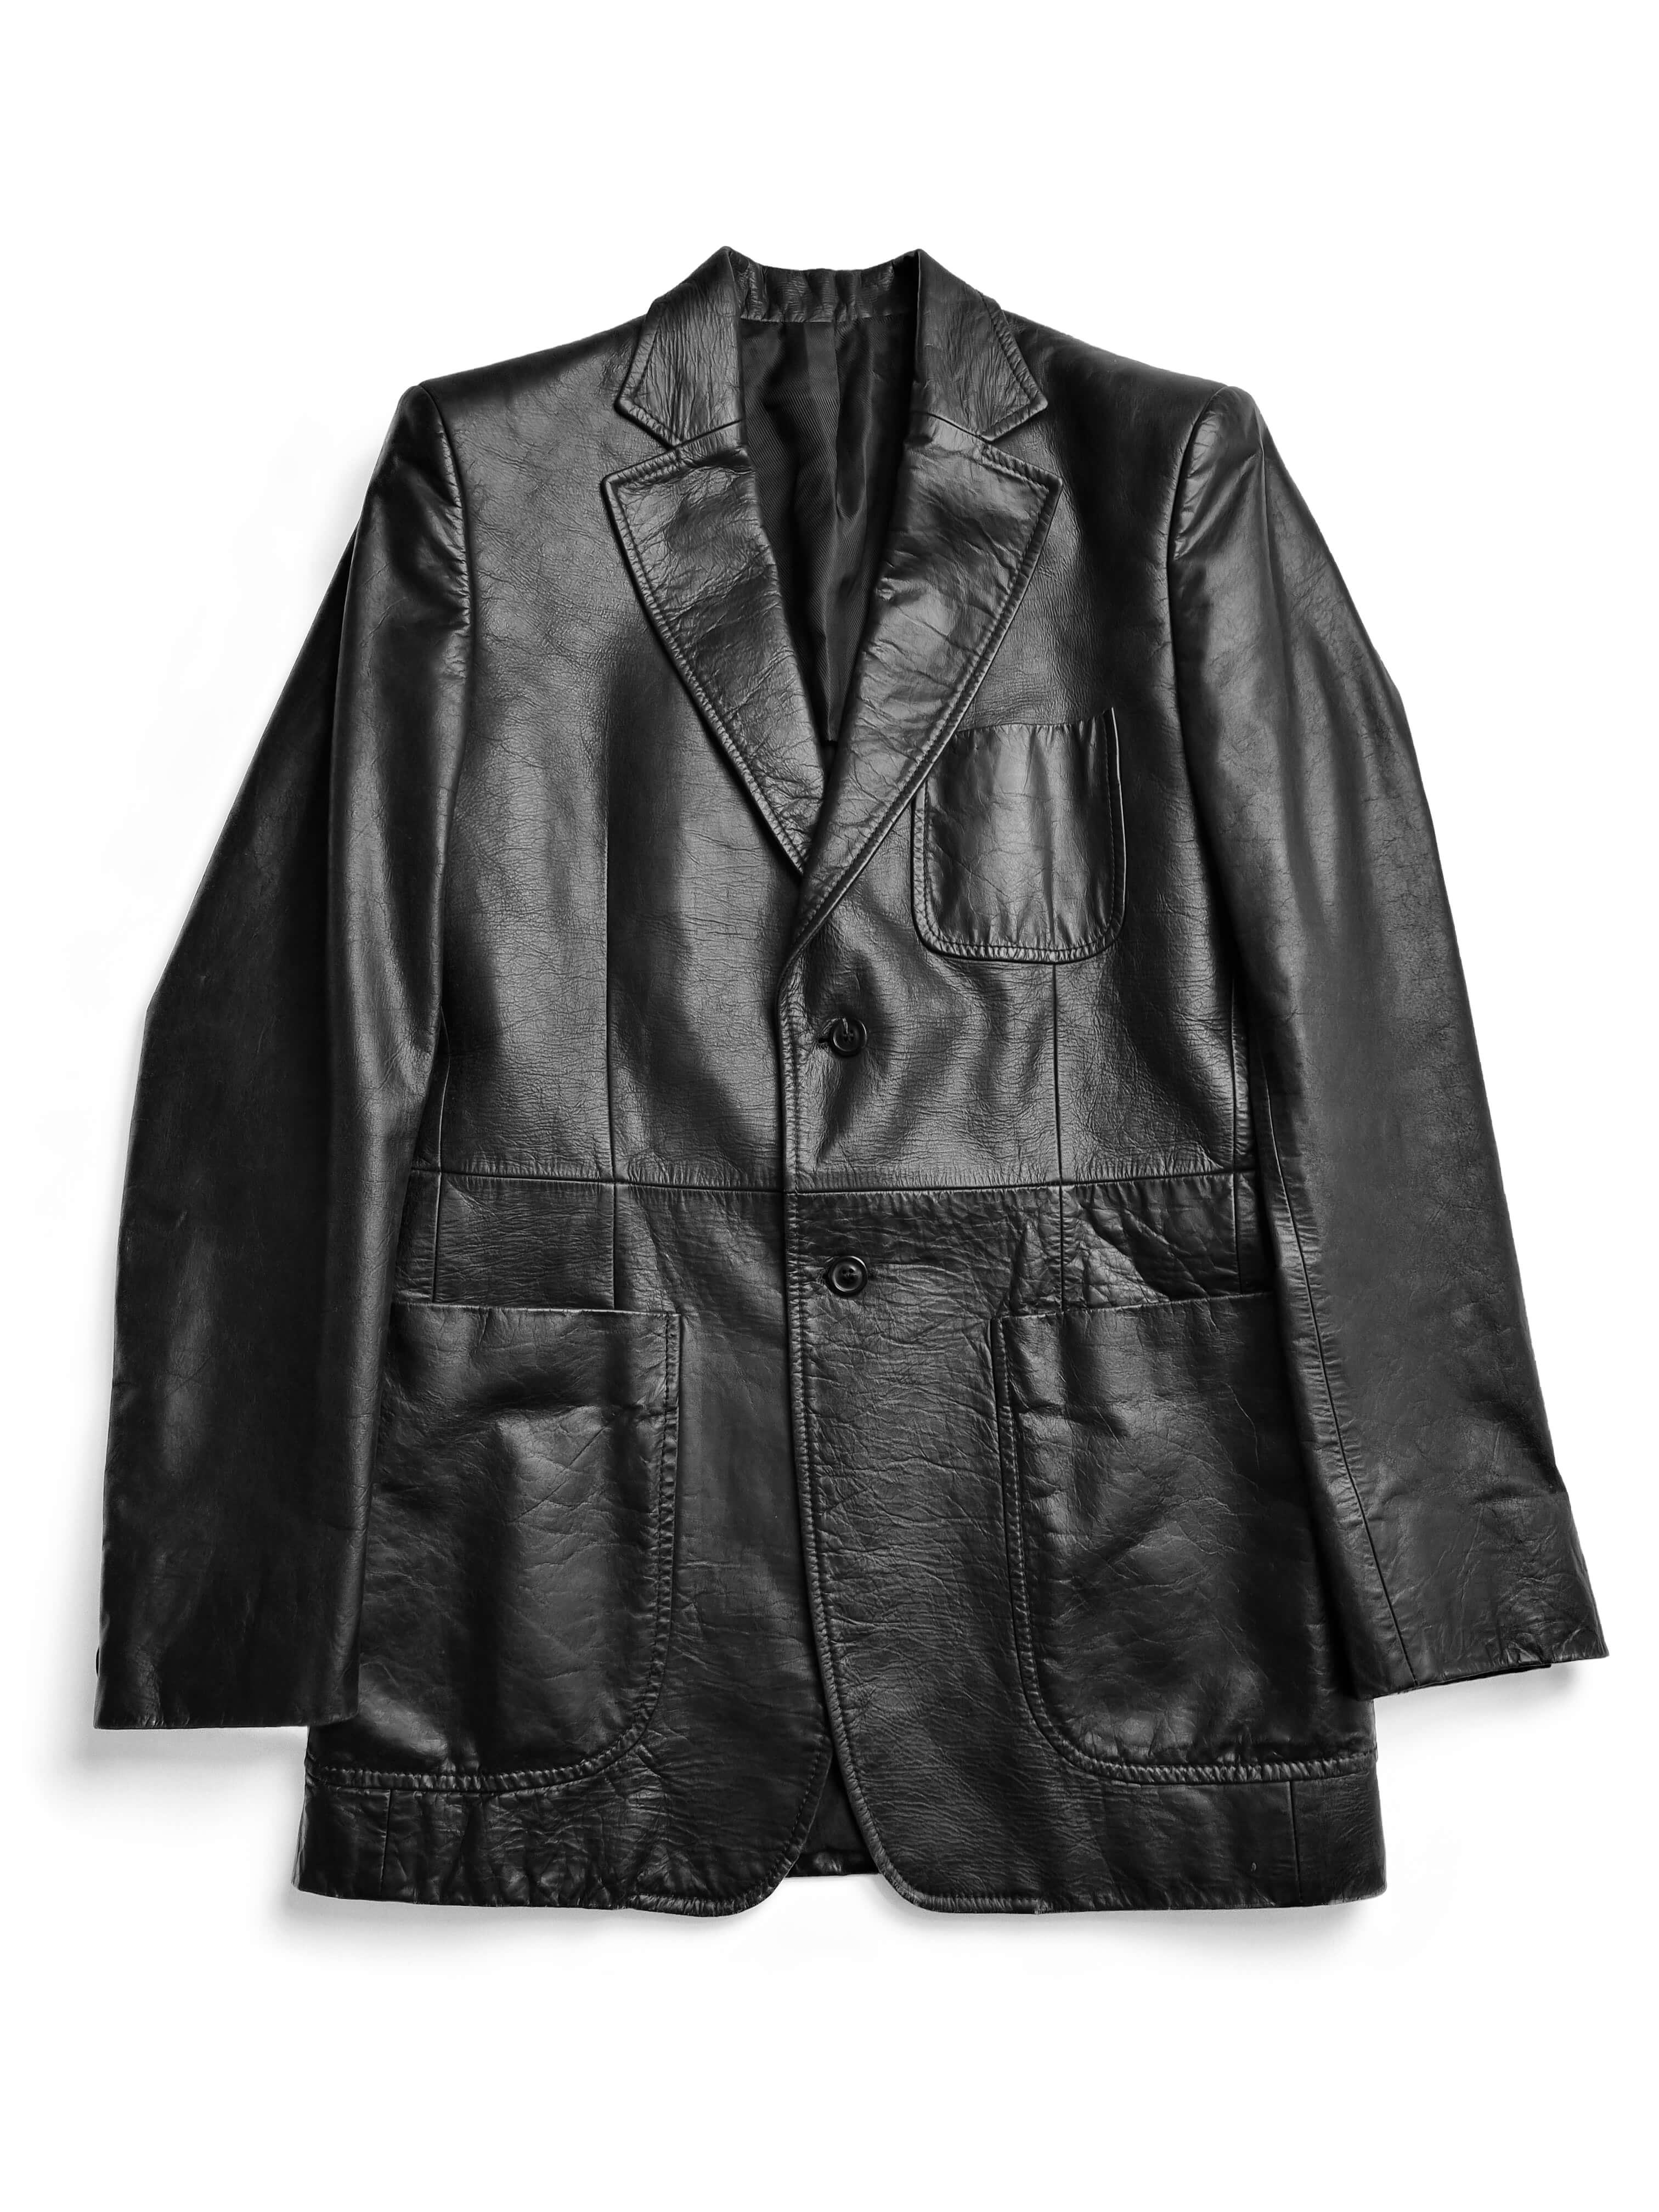 Maison Martin Margiela 2001aw line10 leather blazer